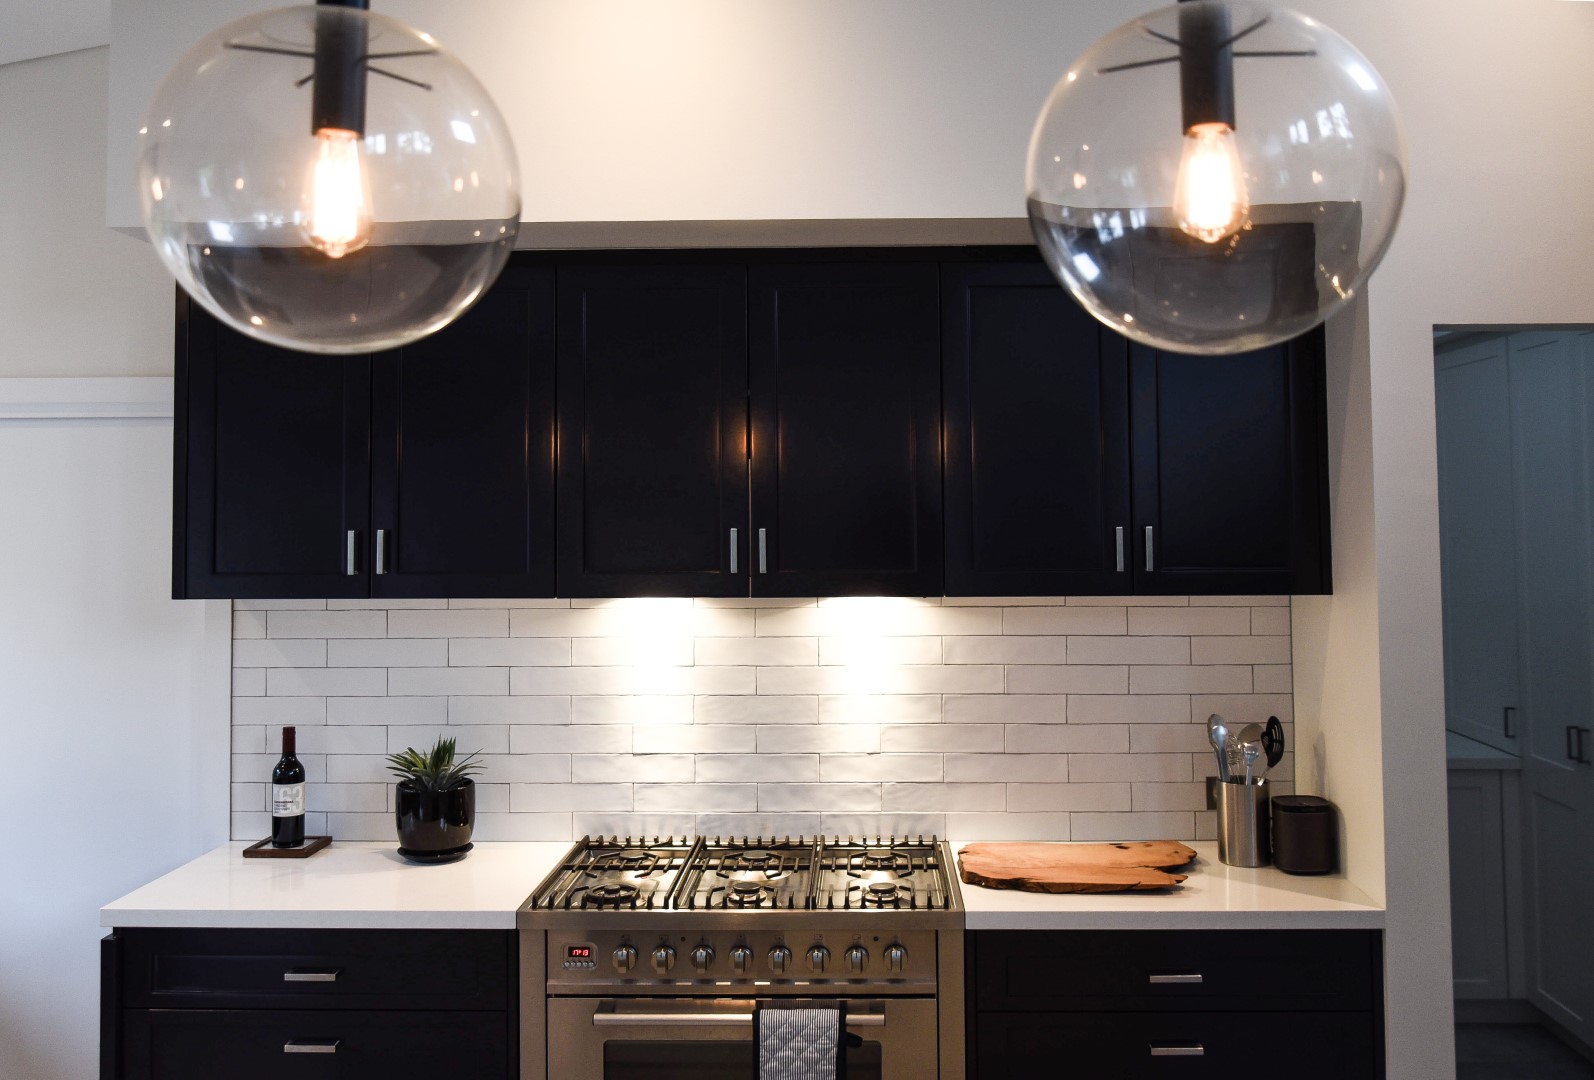 Kitchen Decor Contemporary Lighting Subway Tiles 2022 11 17 14 34 04 Utc